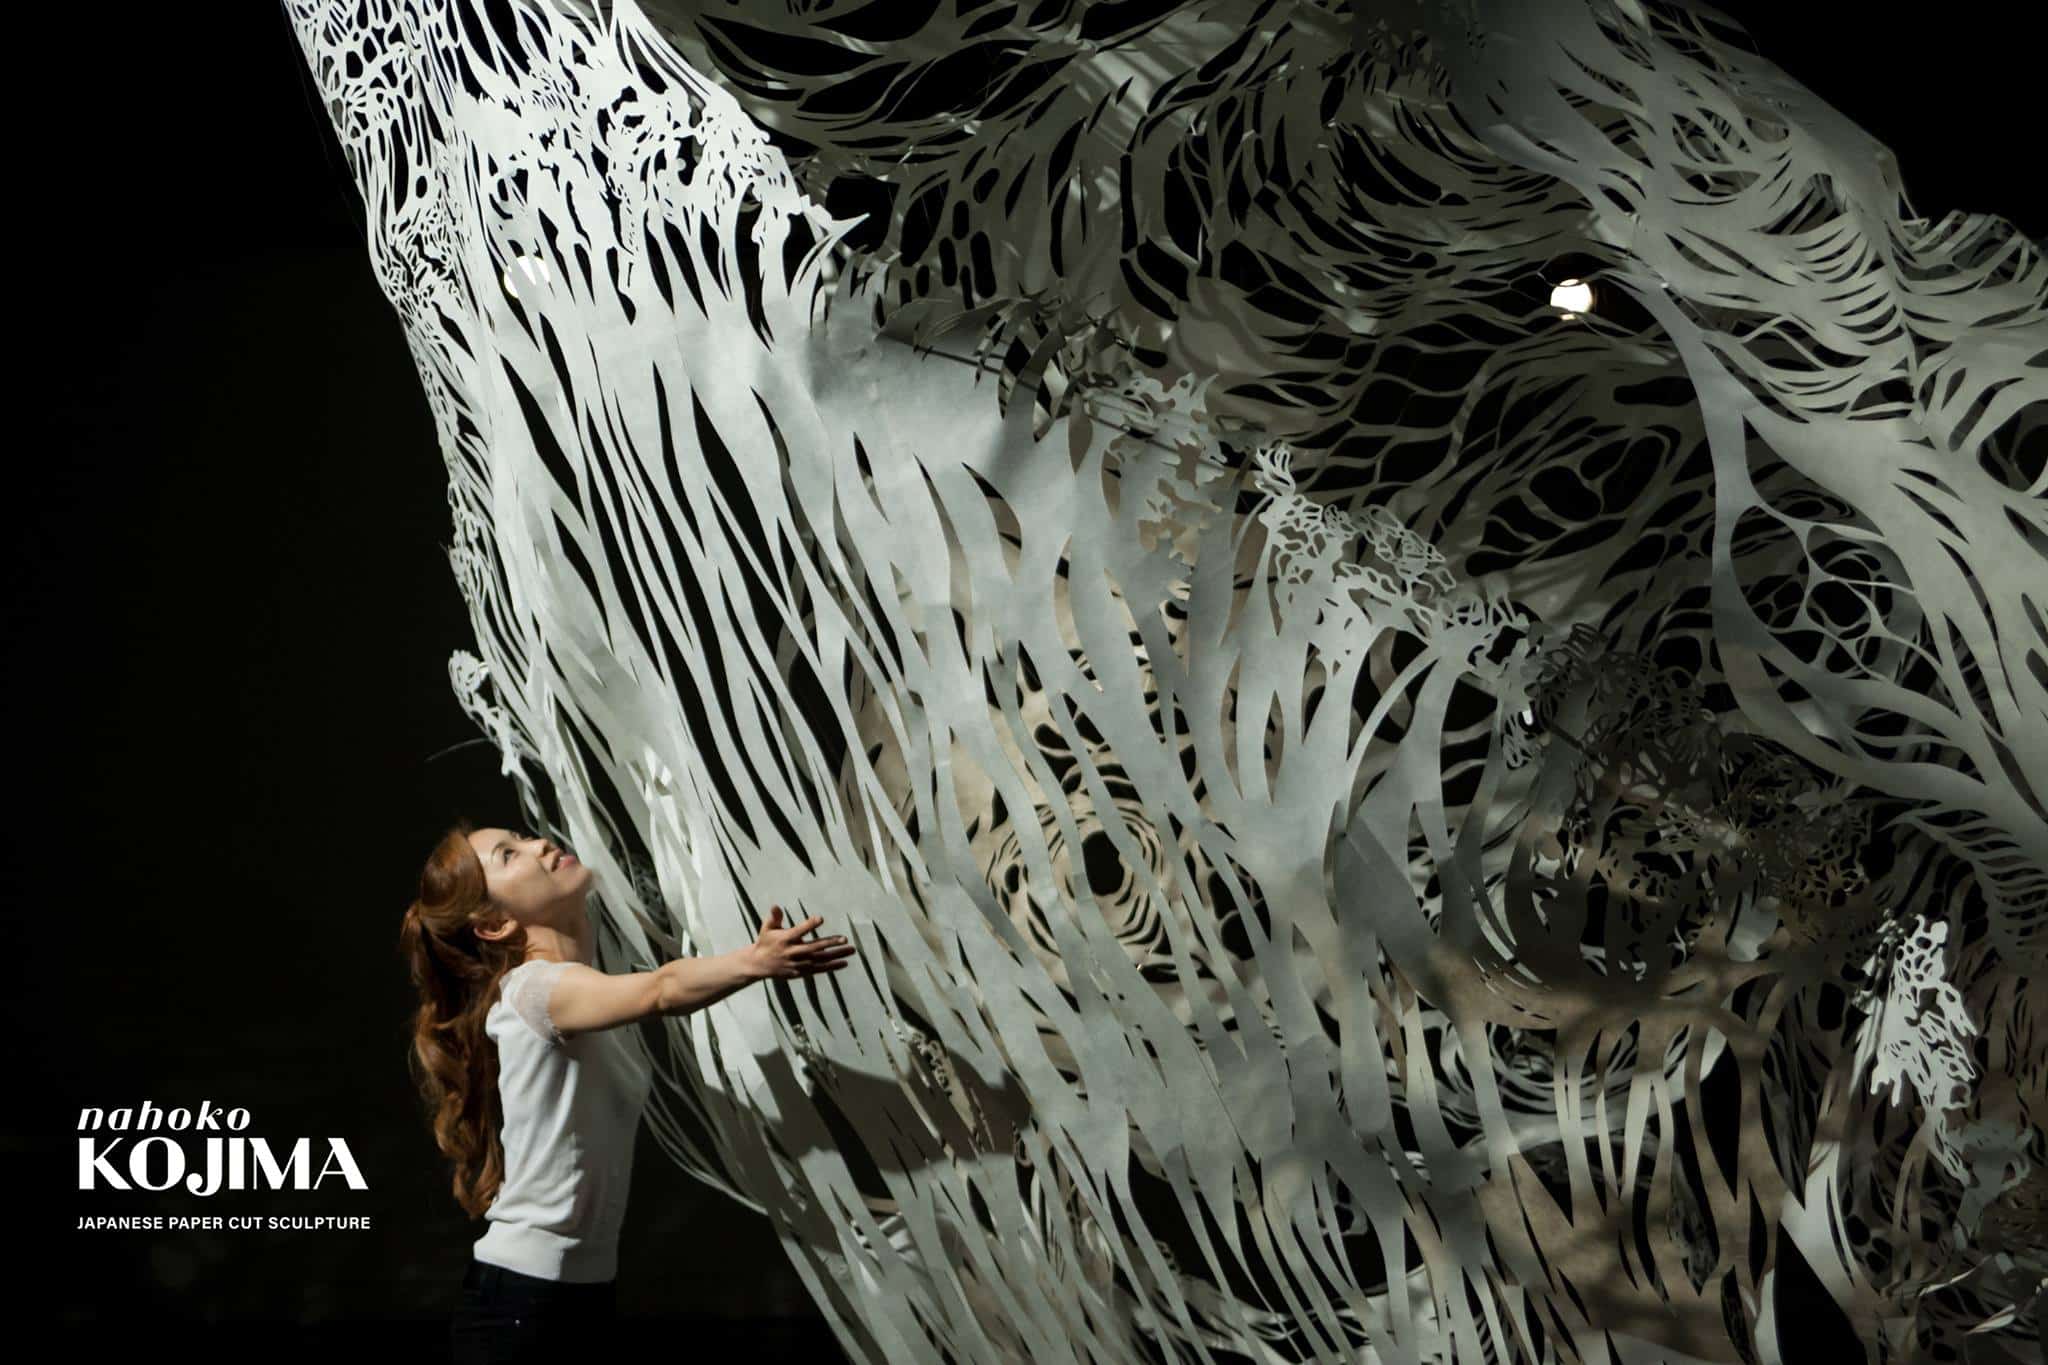 Shiro Japanese Paper Cut Sculpture Exhibition by Nahoko Kojima